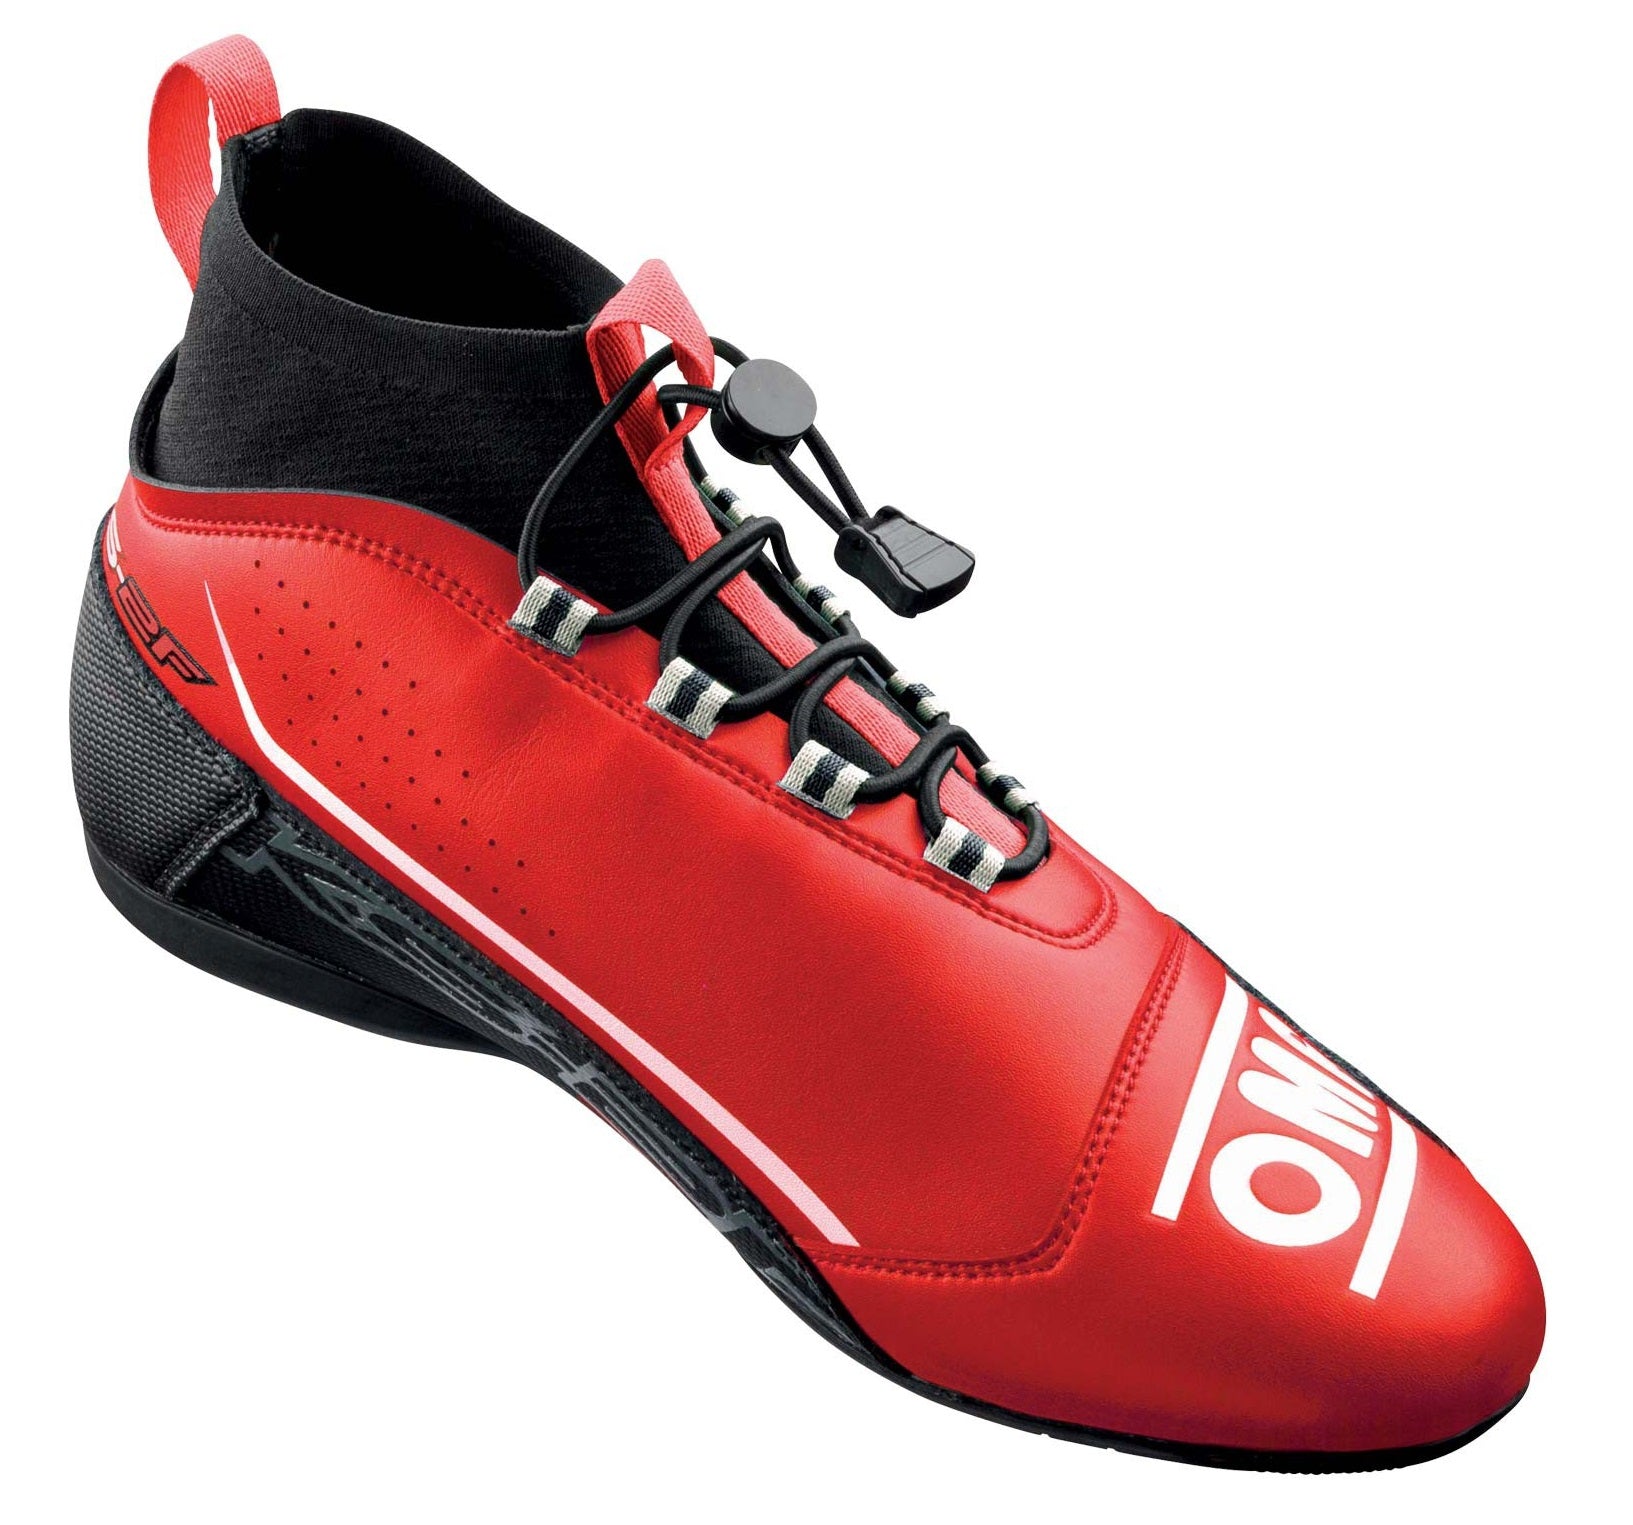 OMP KC0-0830-A01-060-39 KS-2F Karting shoes, red/black, size 39 Photo-1 